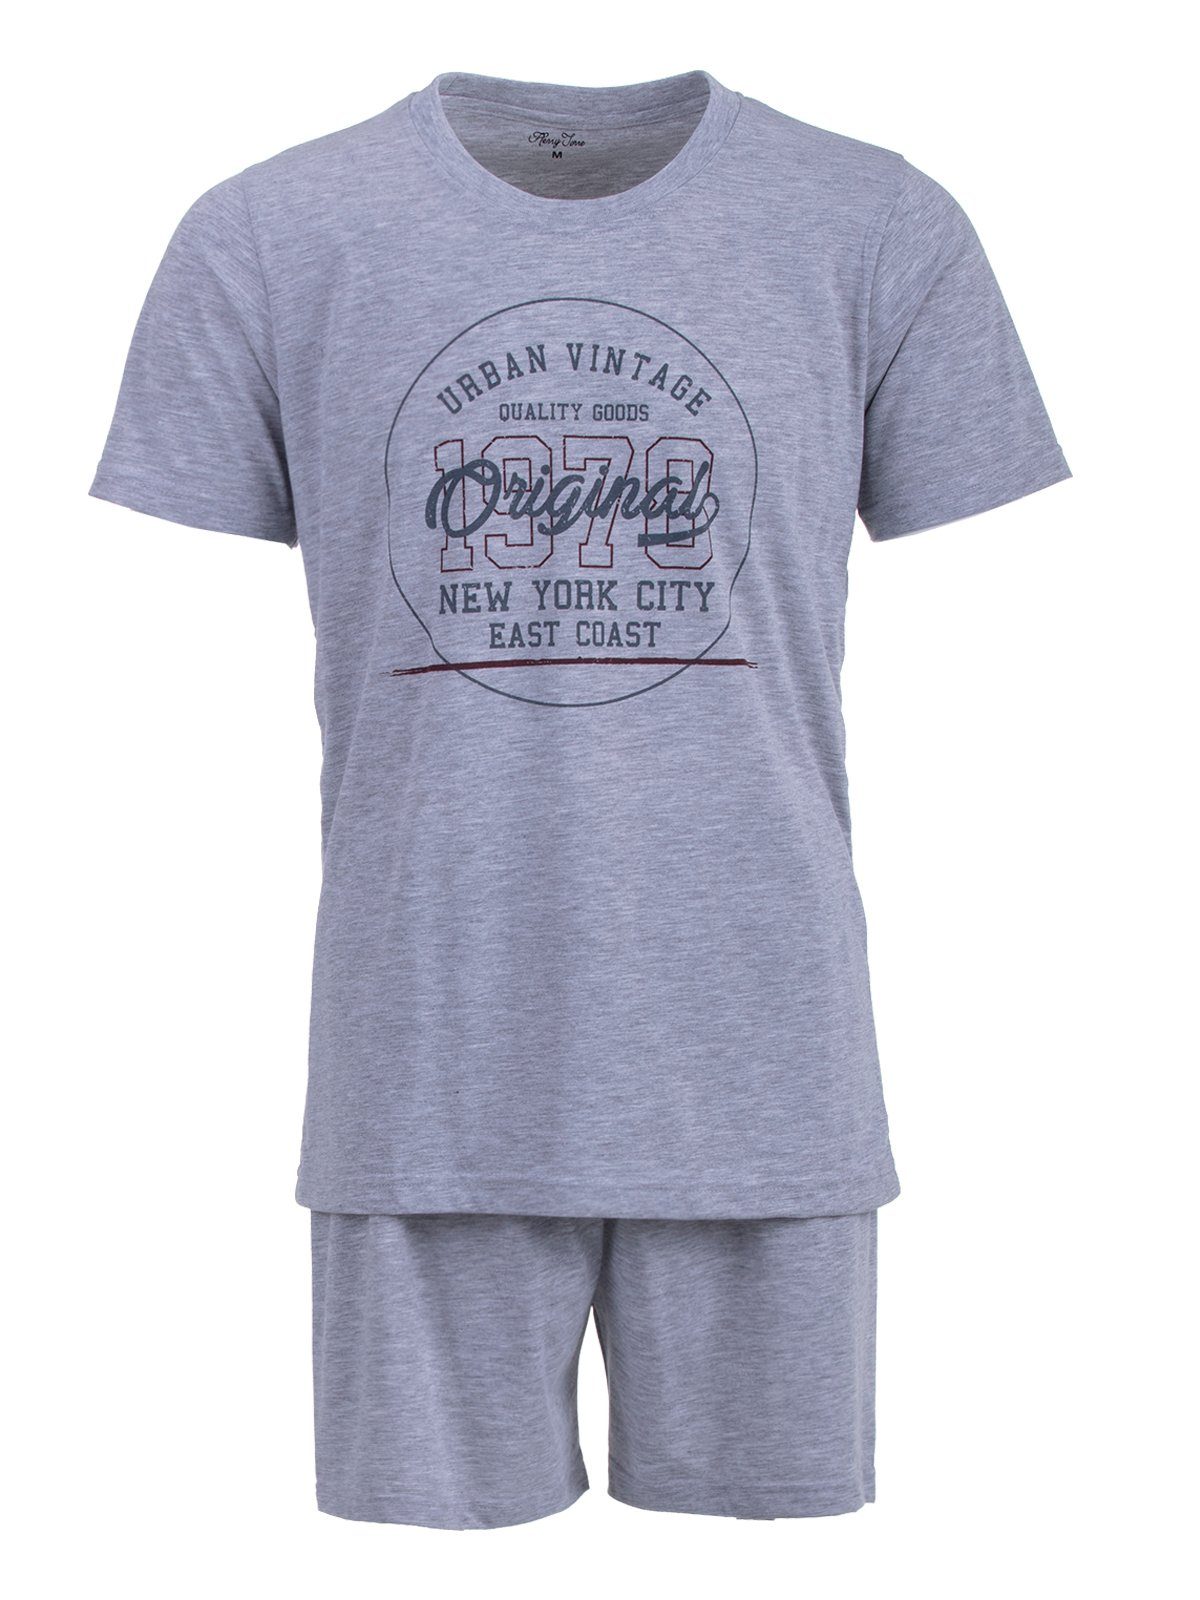 Henry Terre grau Vintage - Shorty Schlafanzug Pyjama Set